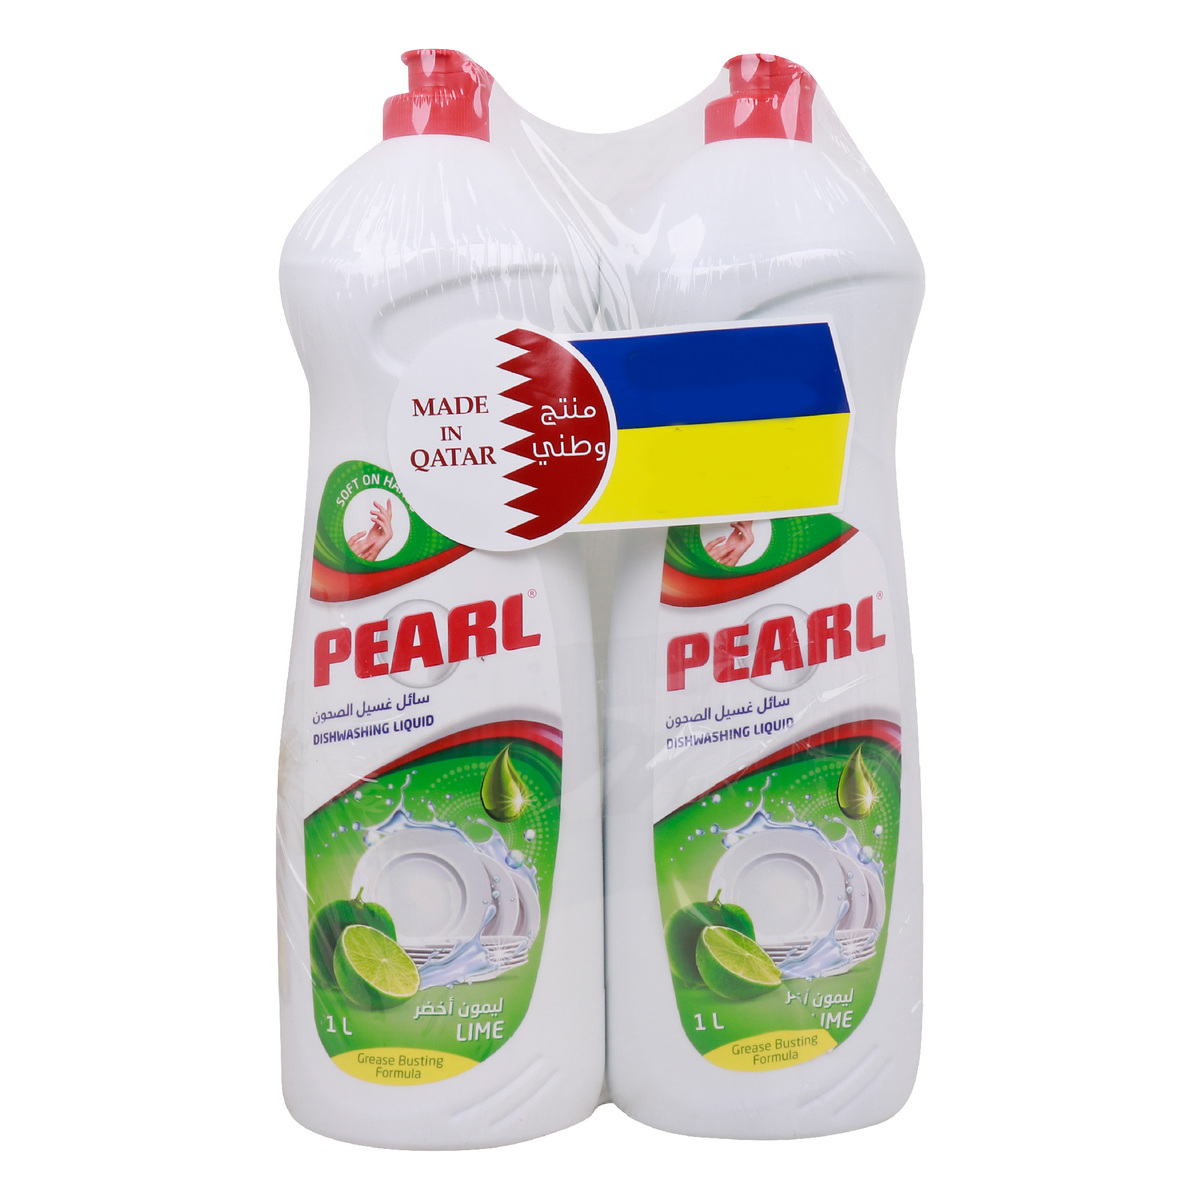 Pearl Lime Dishwashing Liquid Value Pack 2 x 1 Litre